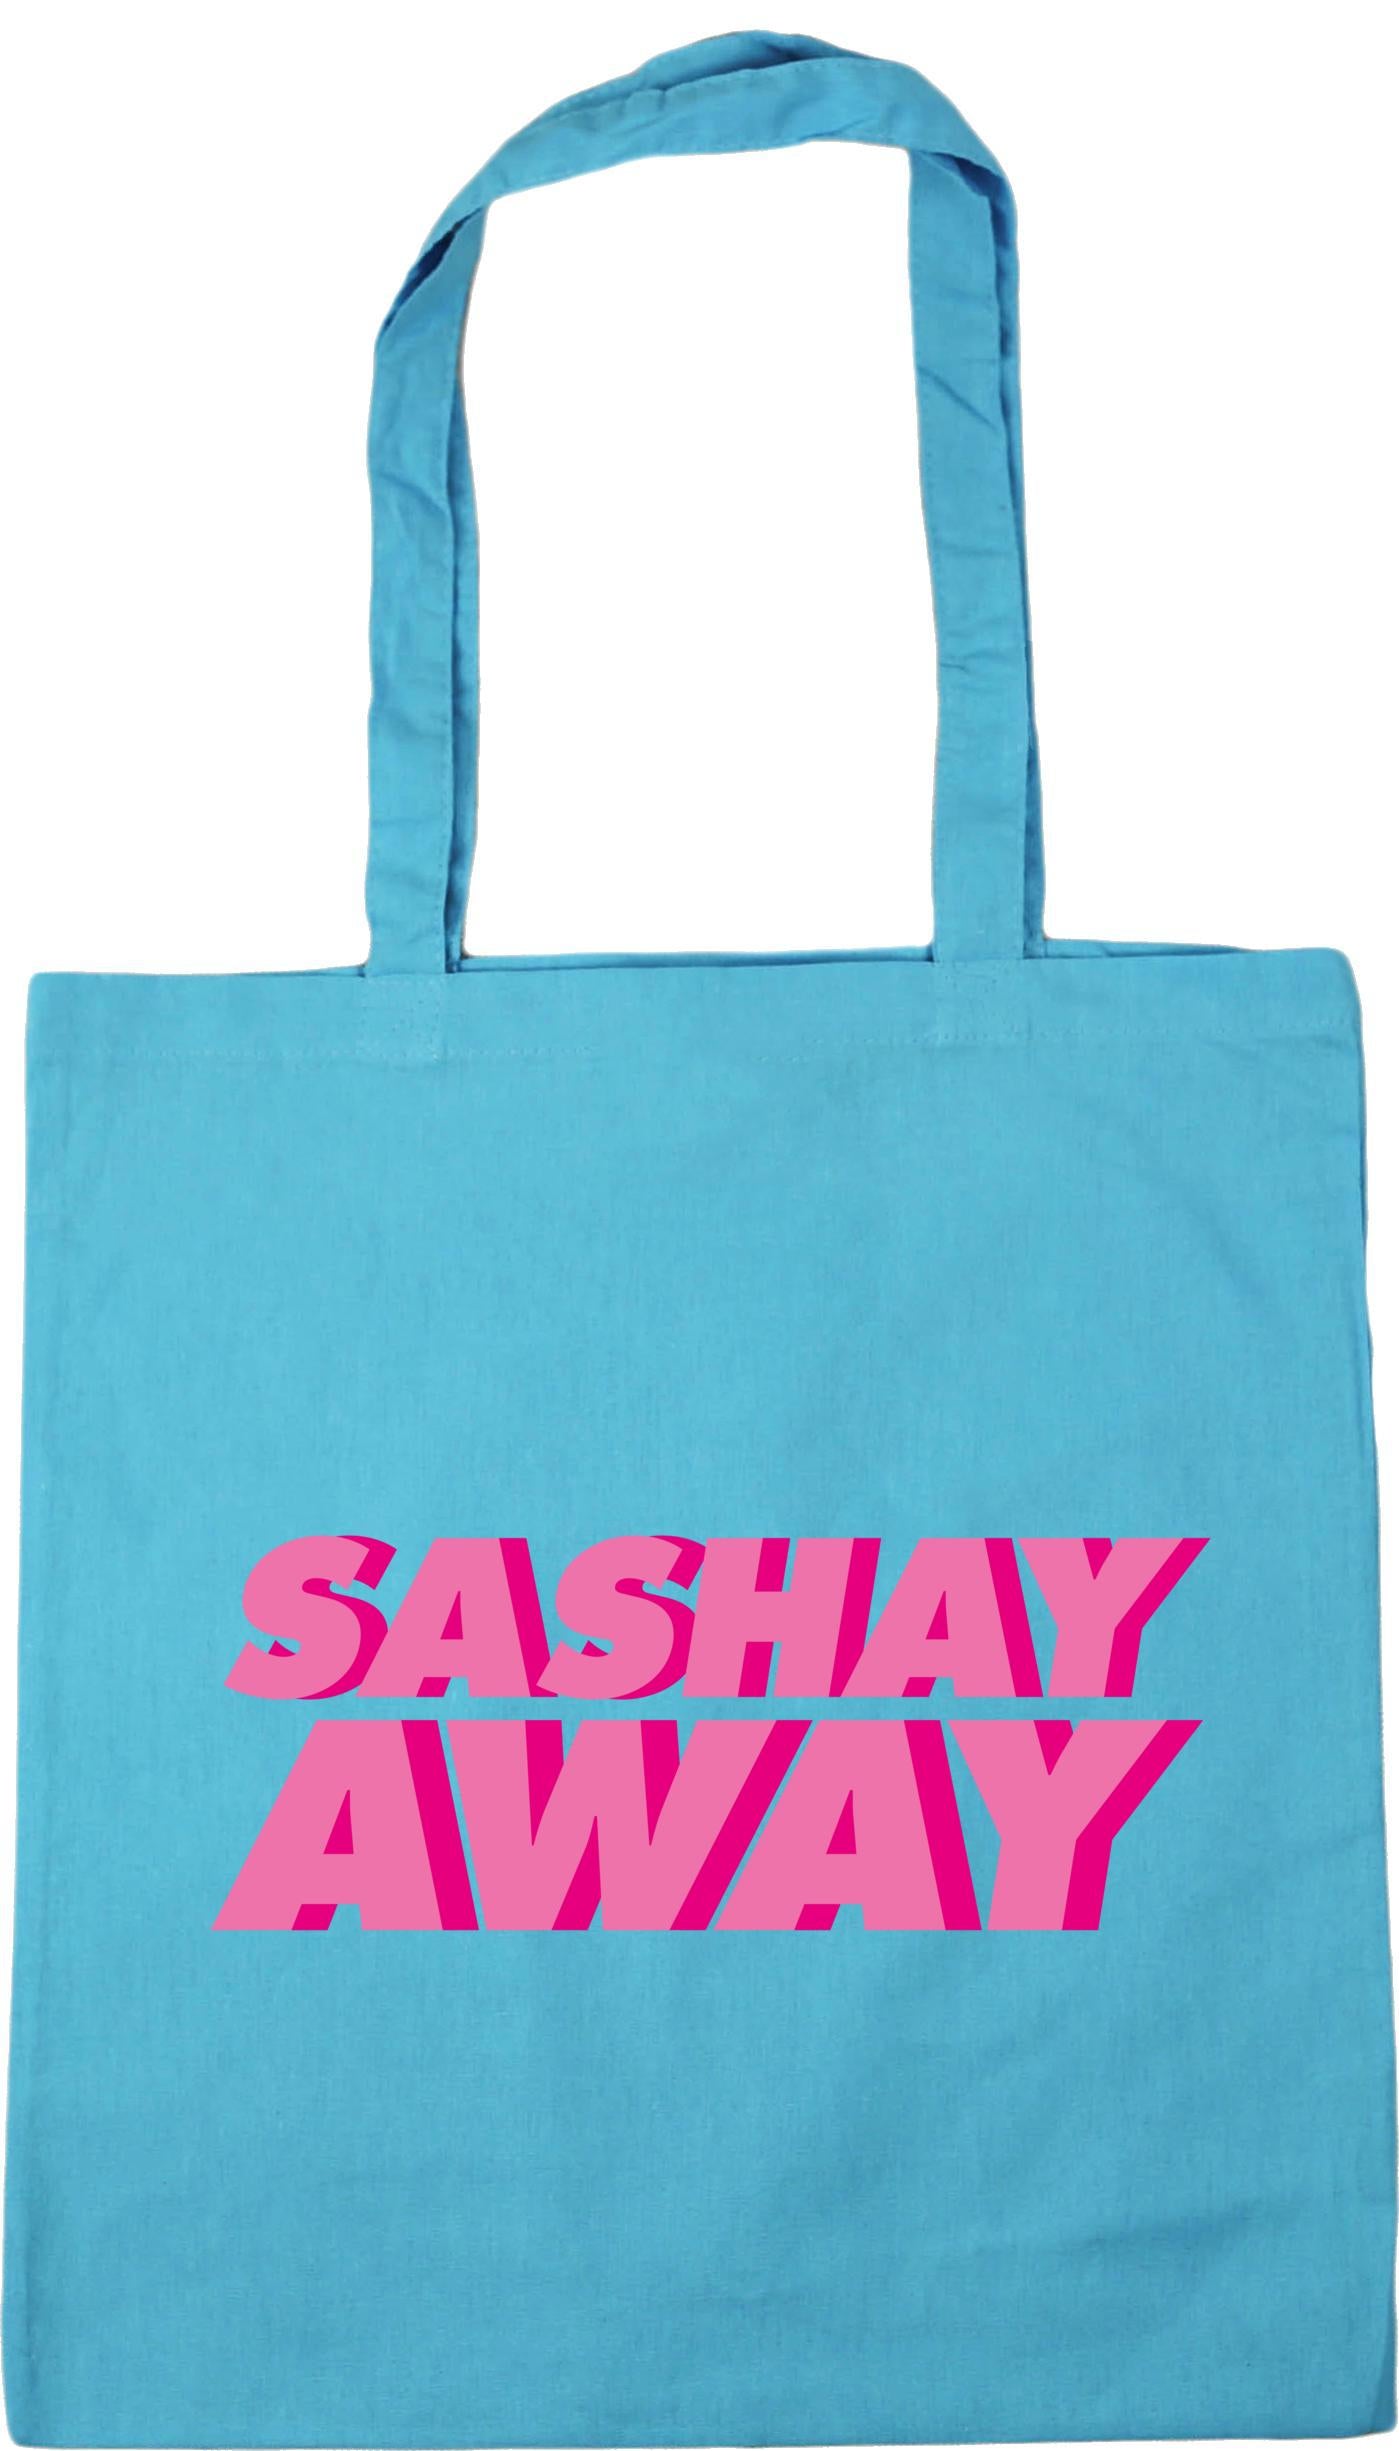 Sashay away Tote Bag